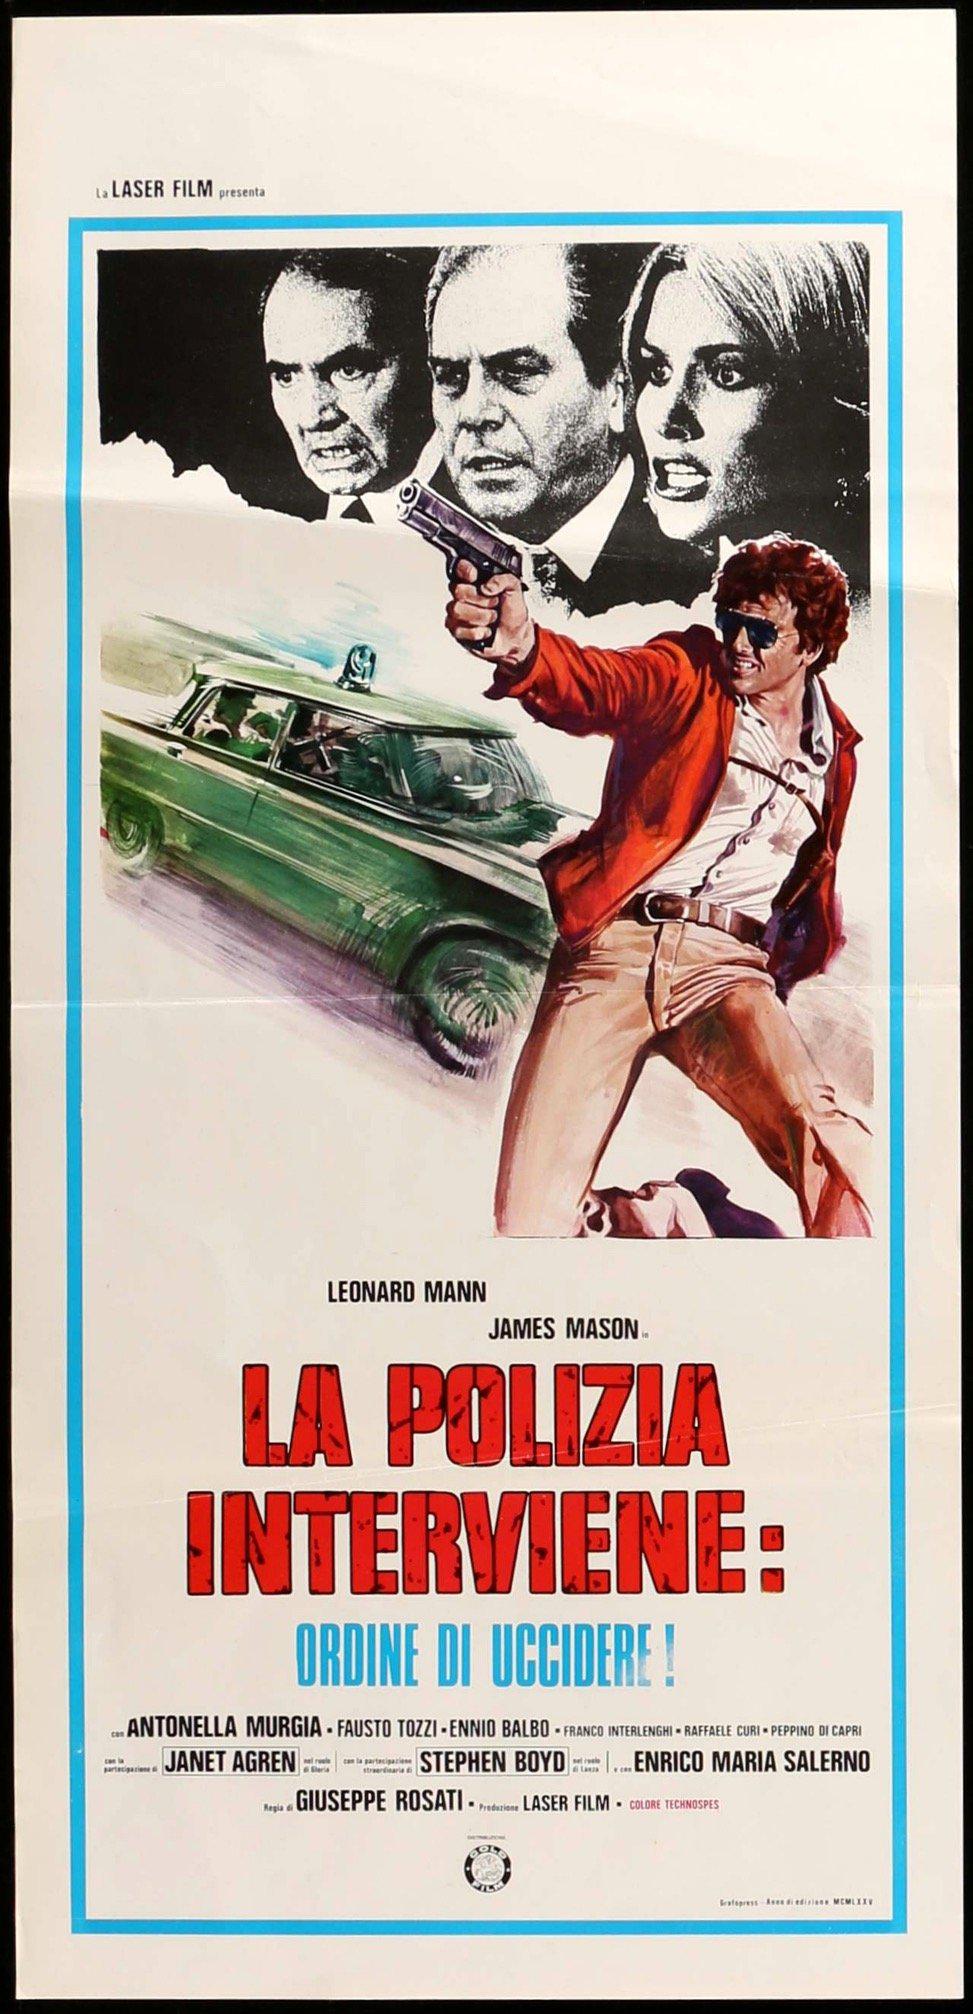 Left Hand of the Law (1975) original movie poster for sale at Original Film Art